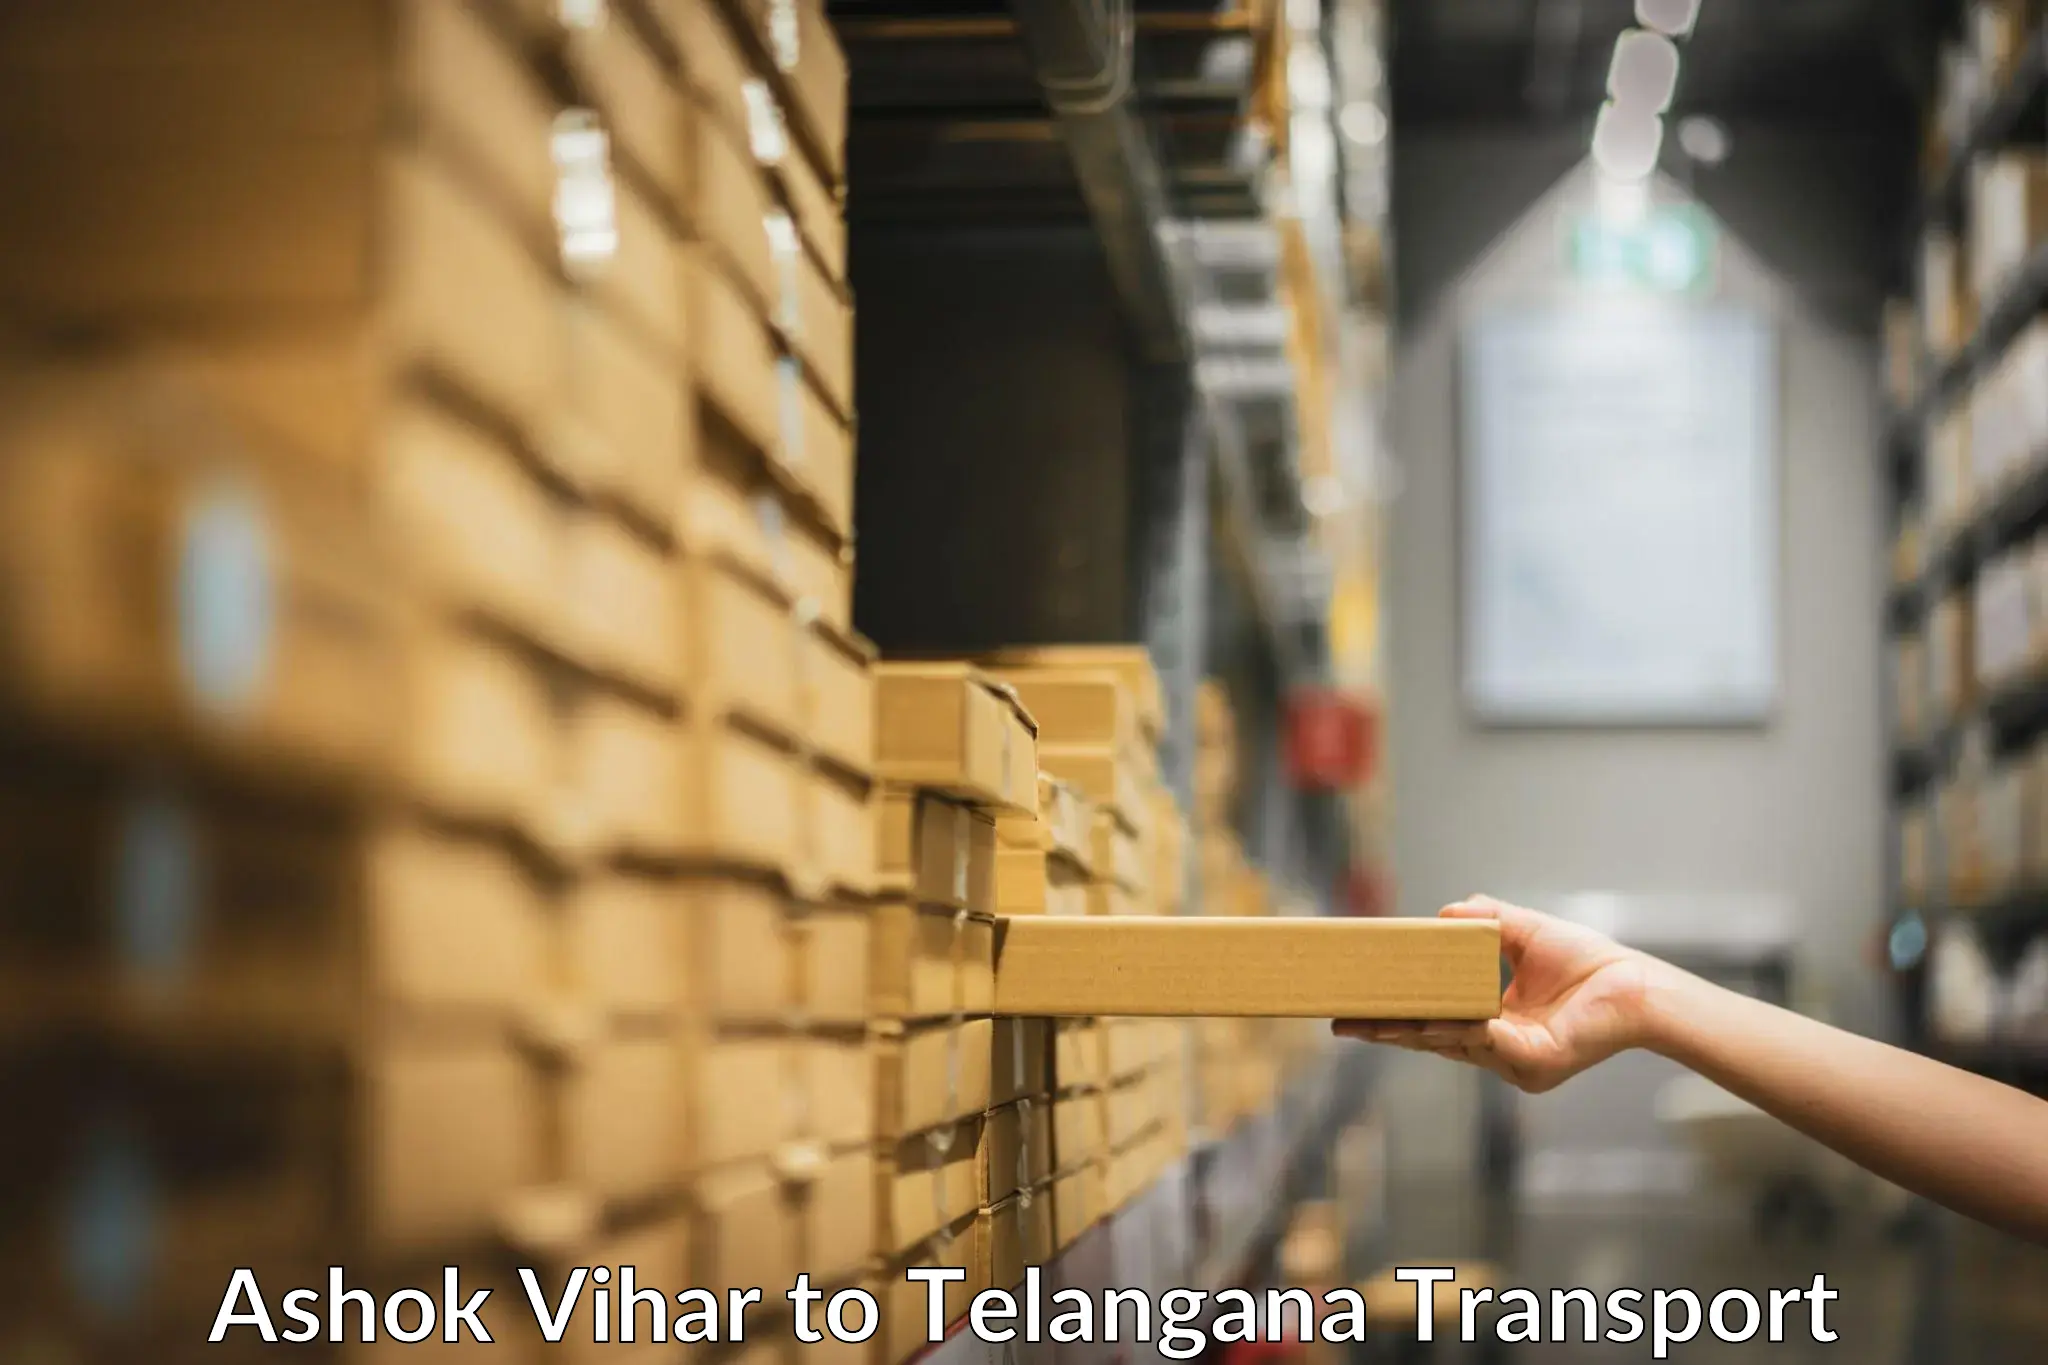 Truck transport companies in India Ashok Vihar to Jagtial